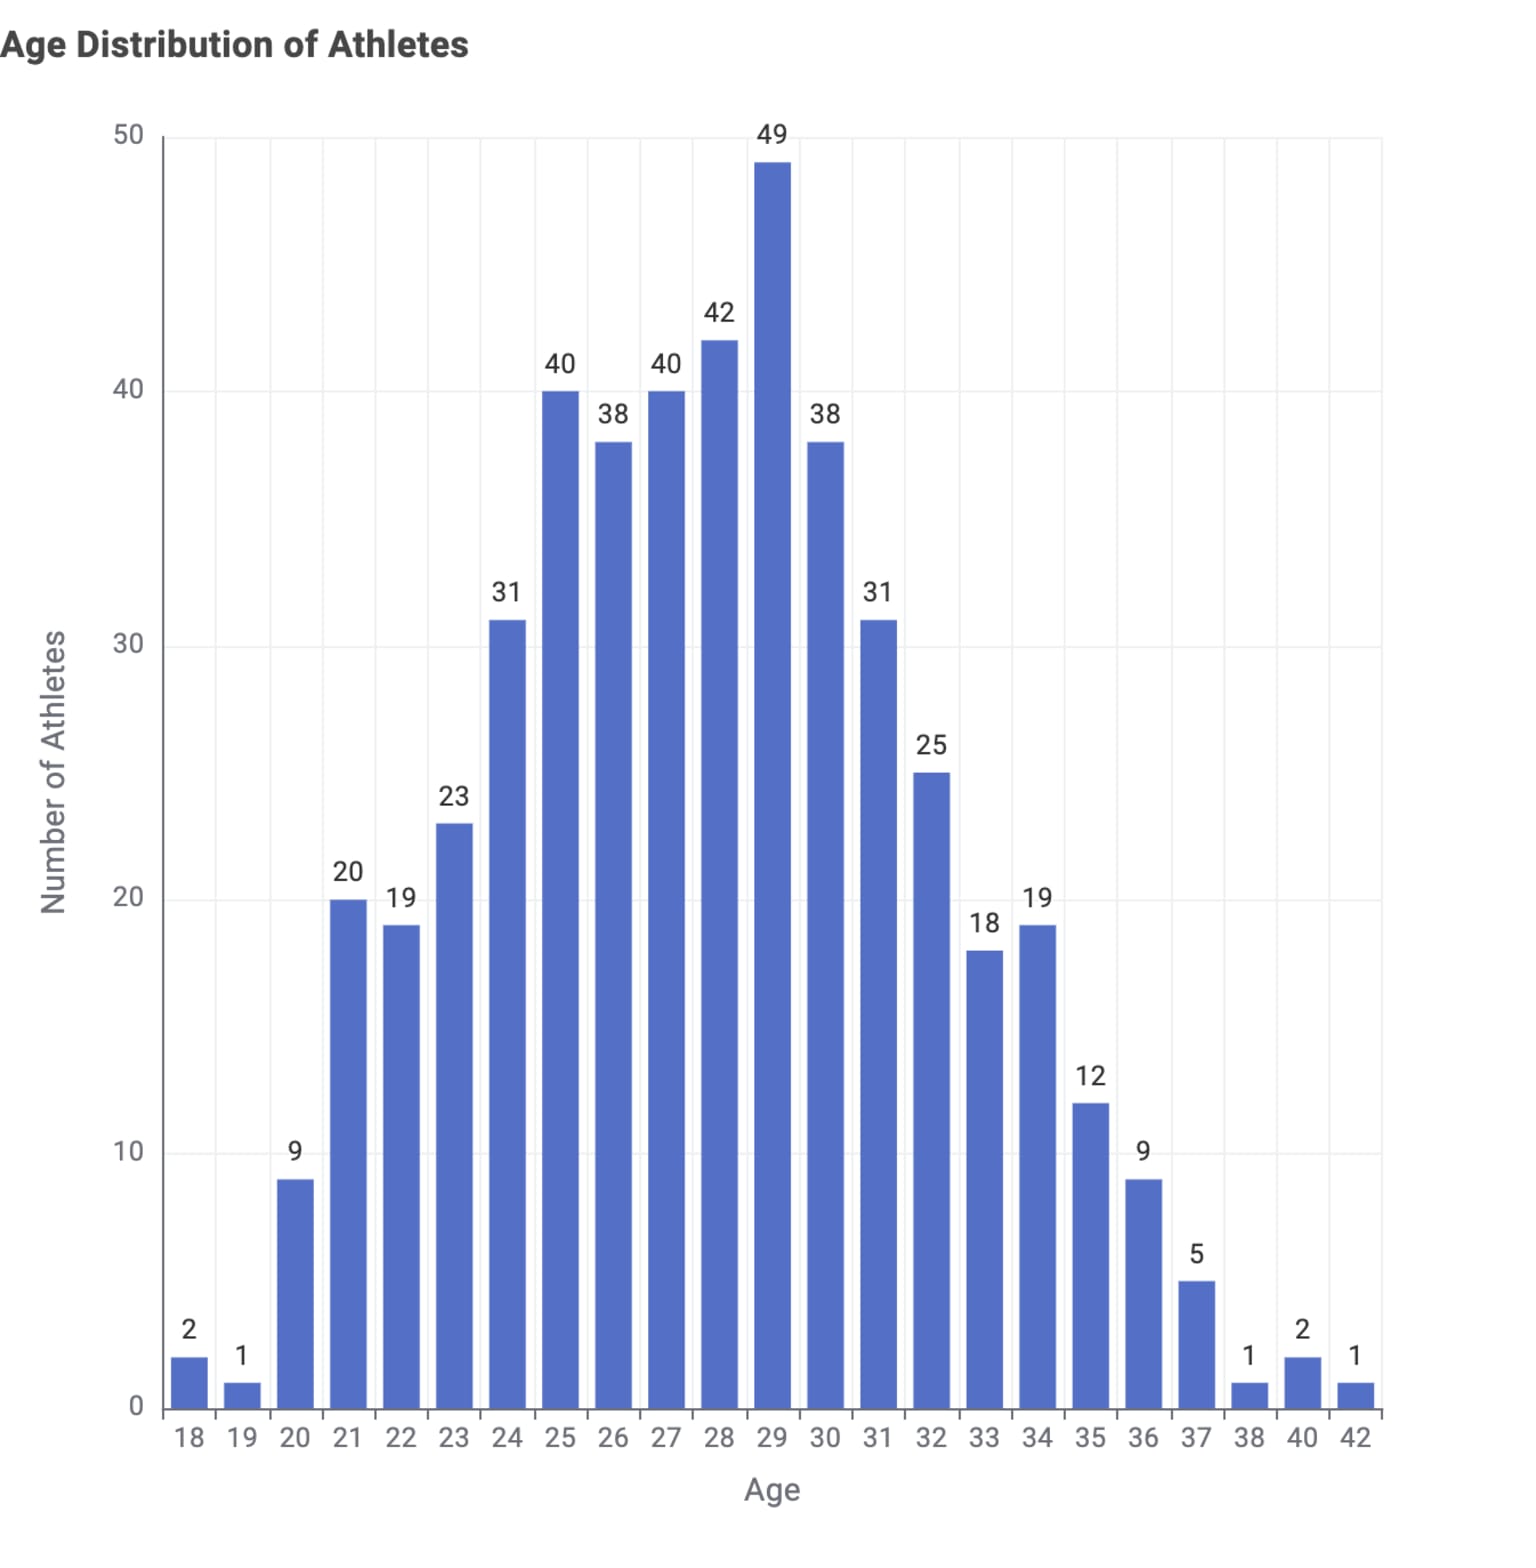 Age distribution in triathlon athletes